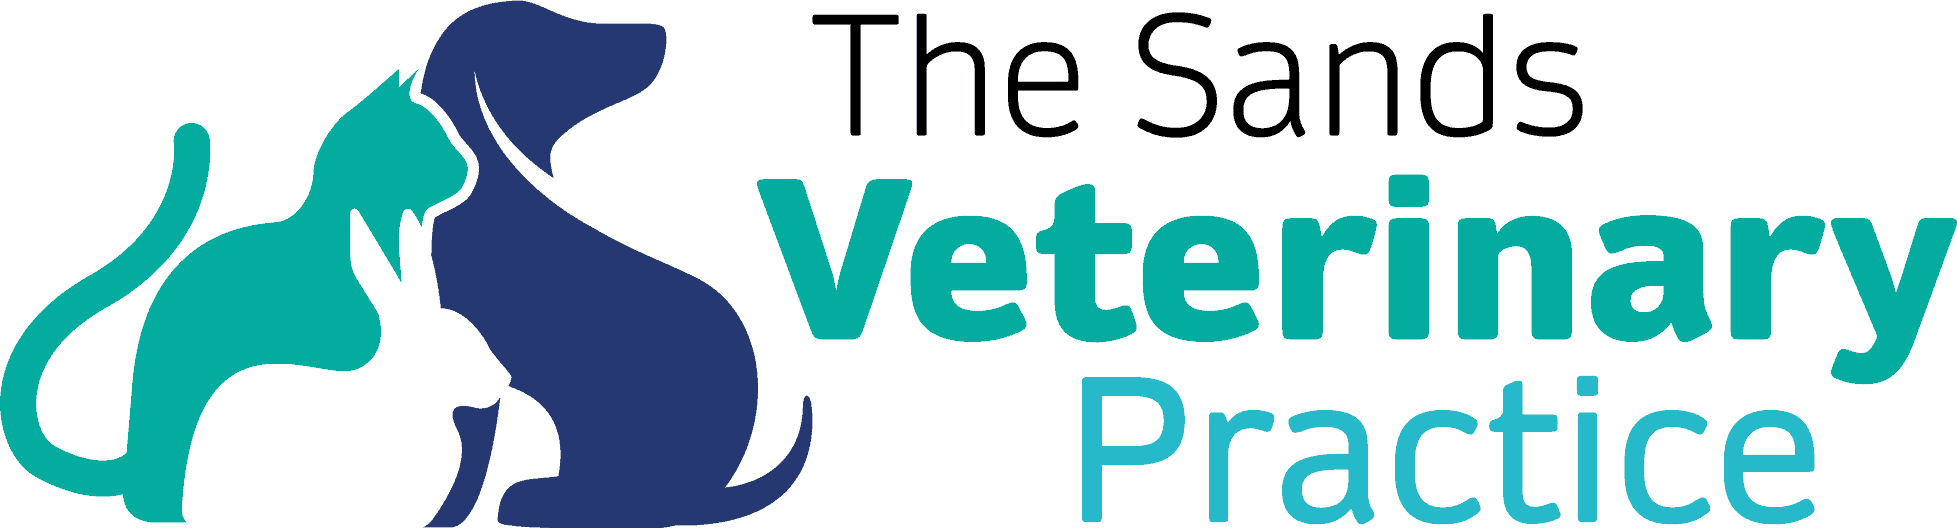 The Sands Veterinary Practice